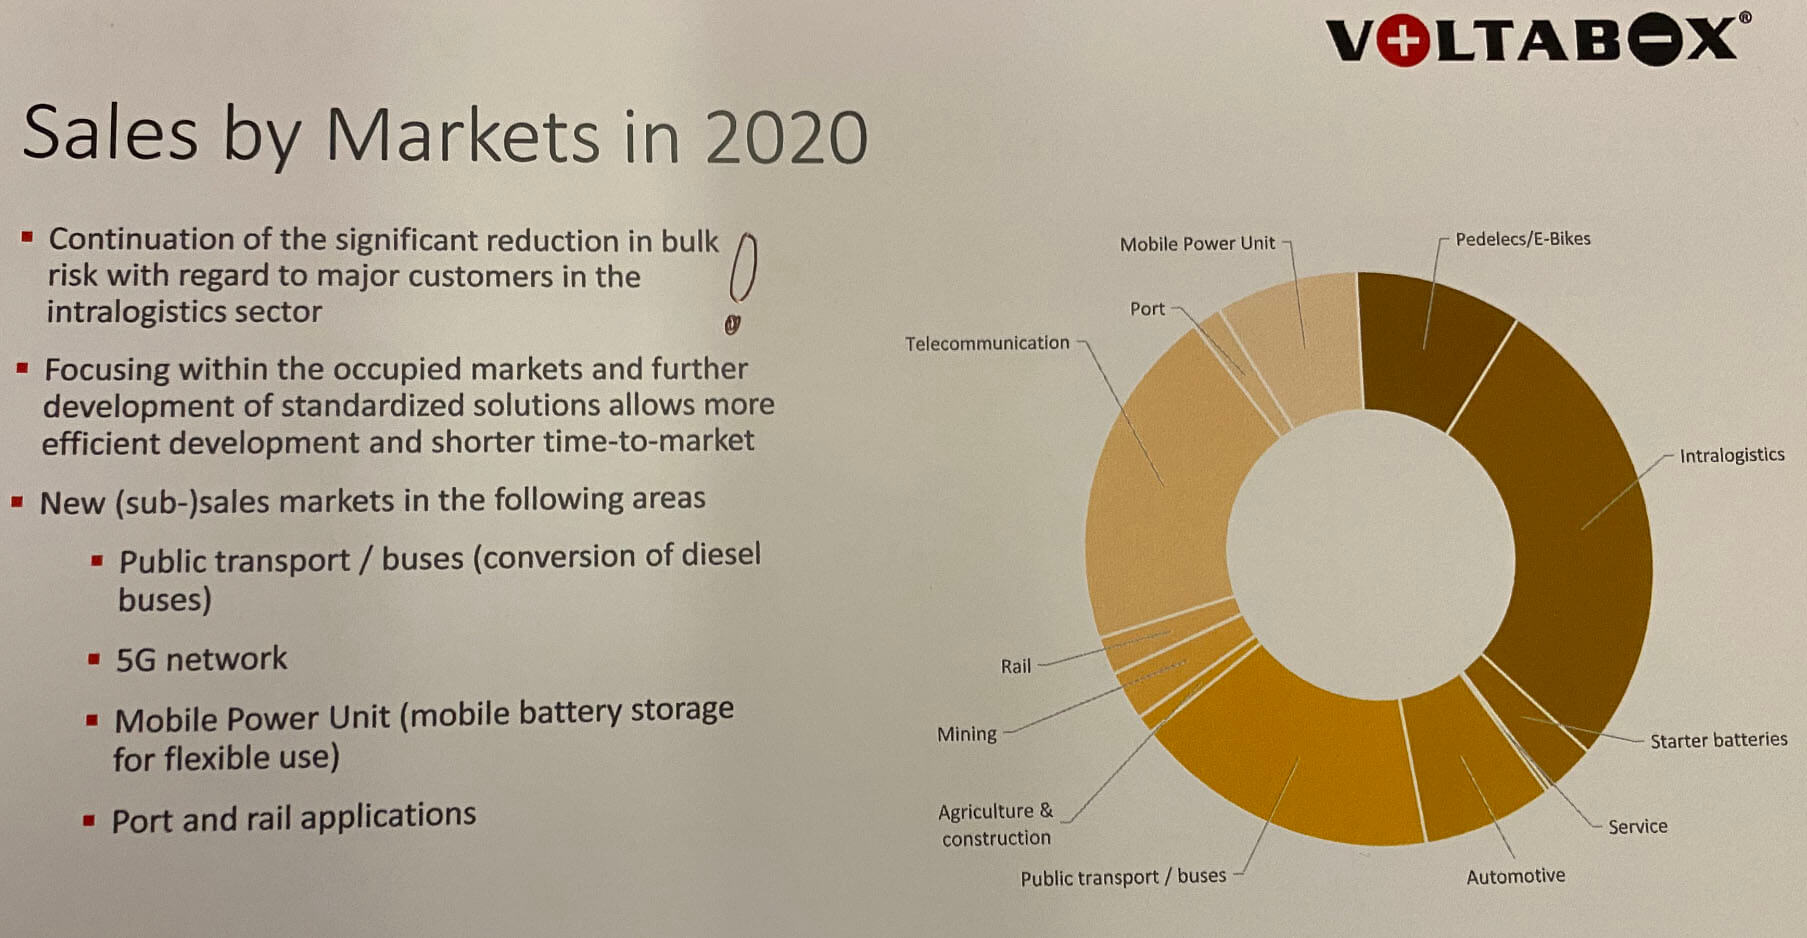 voltabox sales by markets in 2020